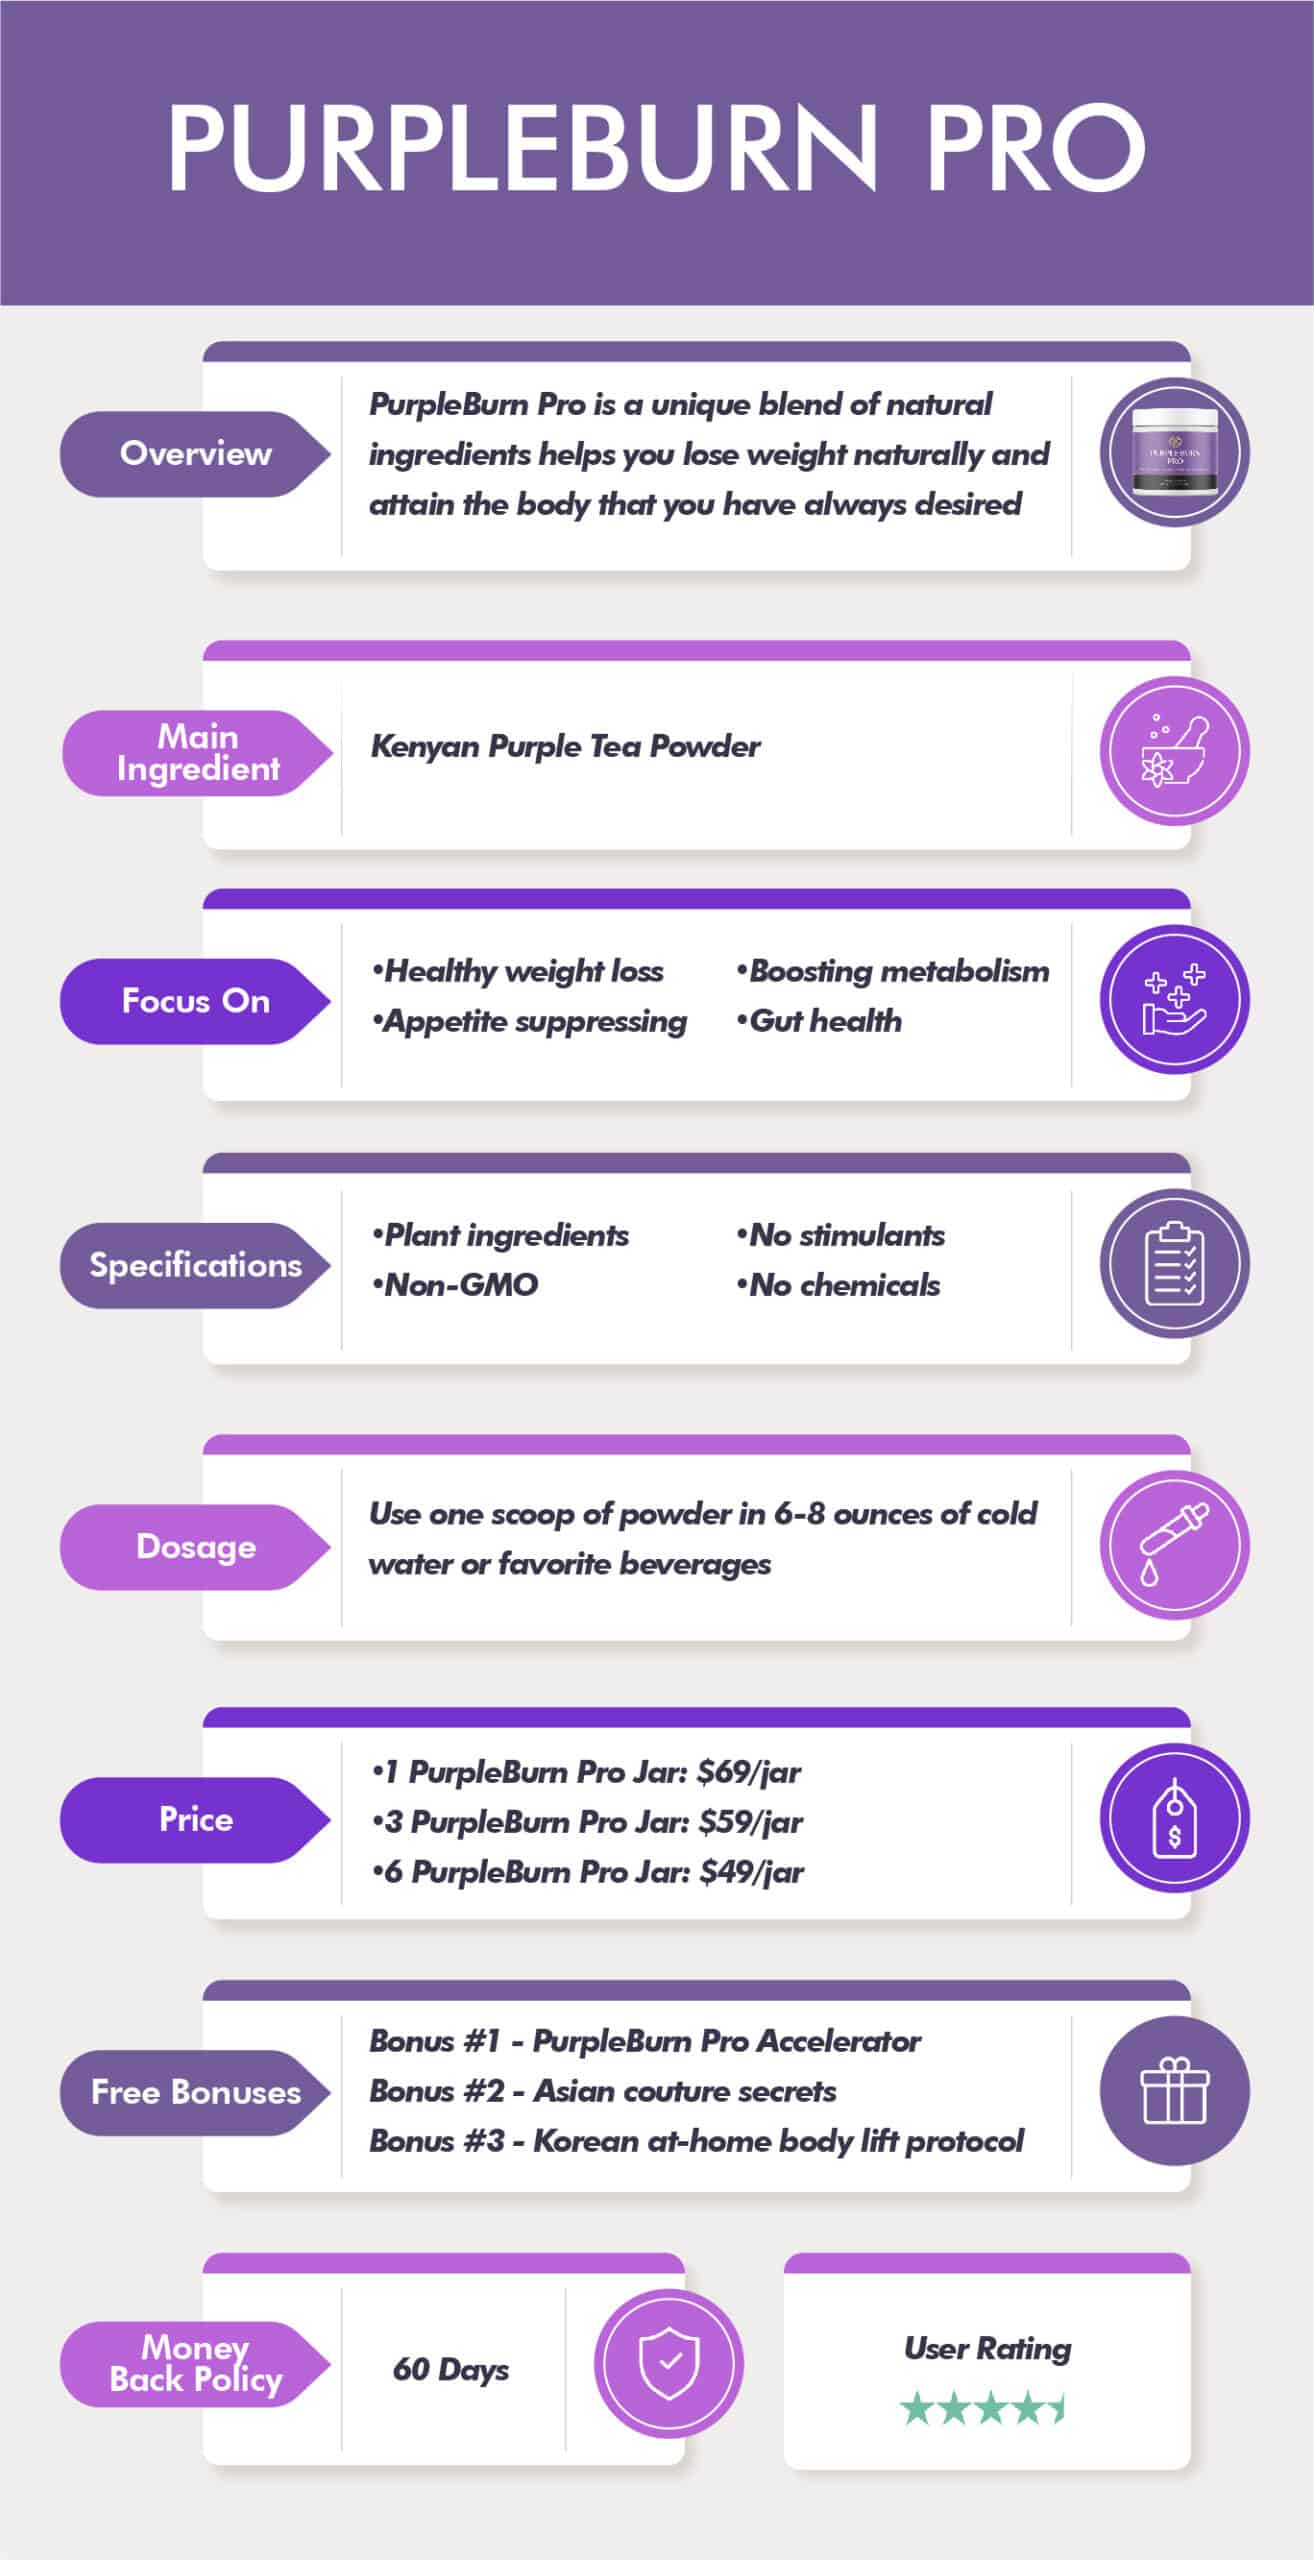 PurpleBurn Pro Overview